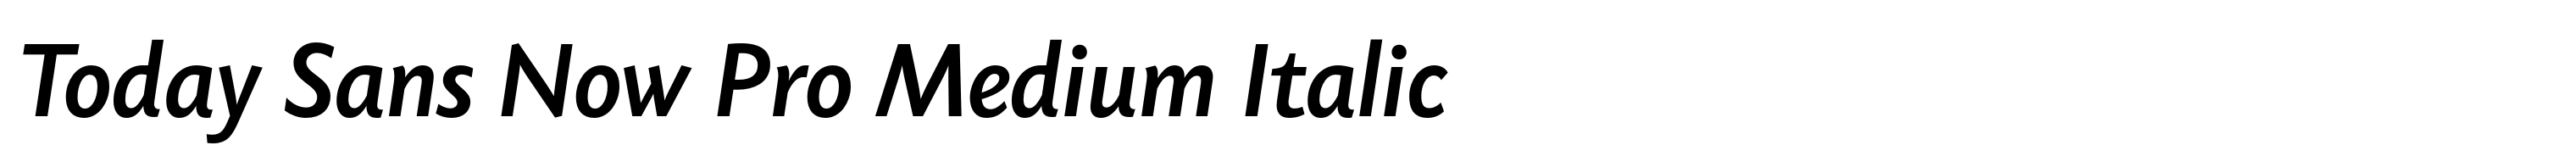 Today Sans Now Pro Medium Italic